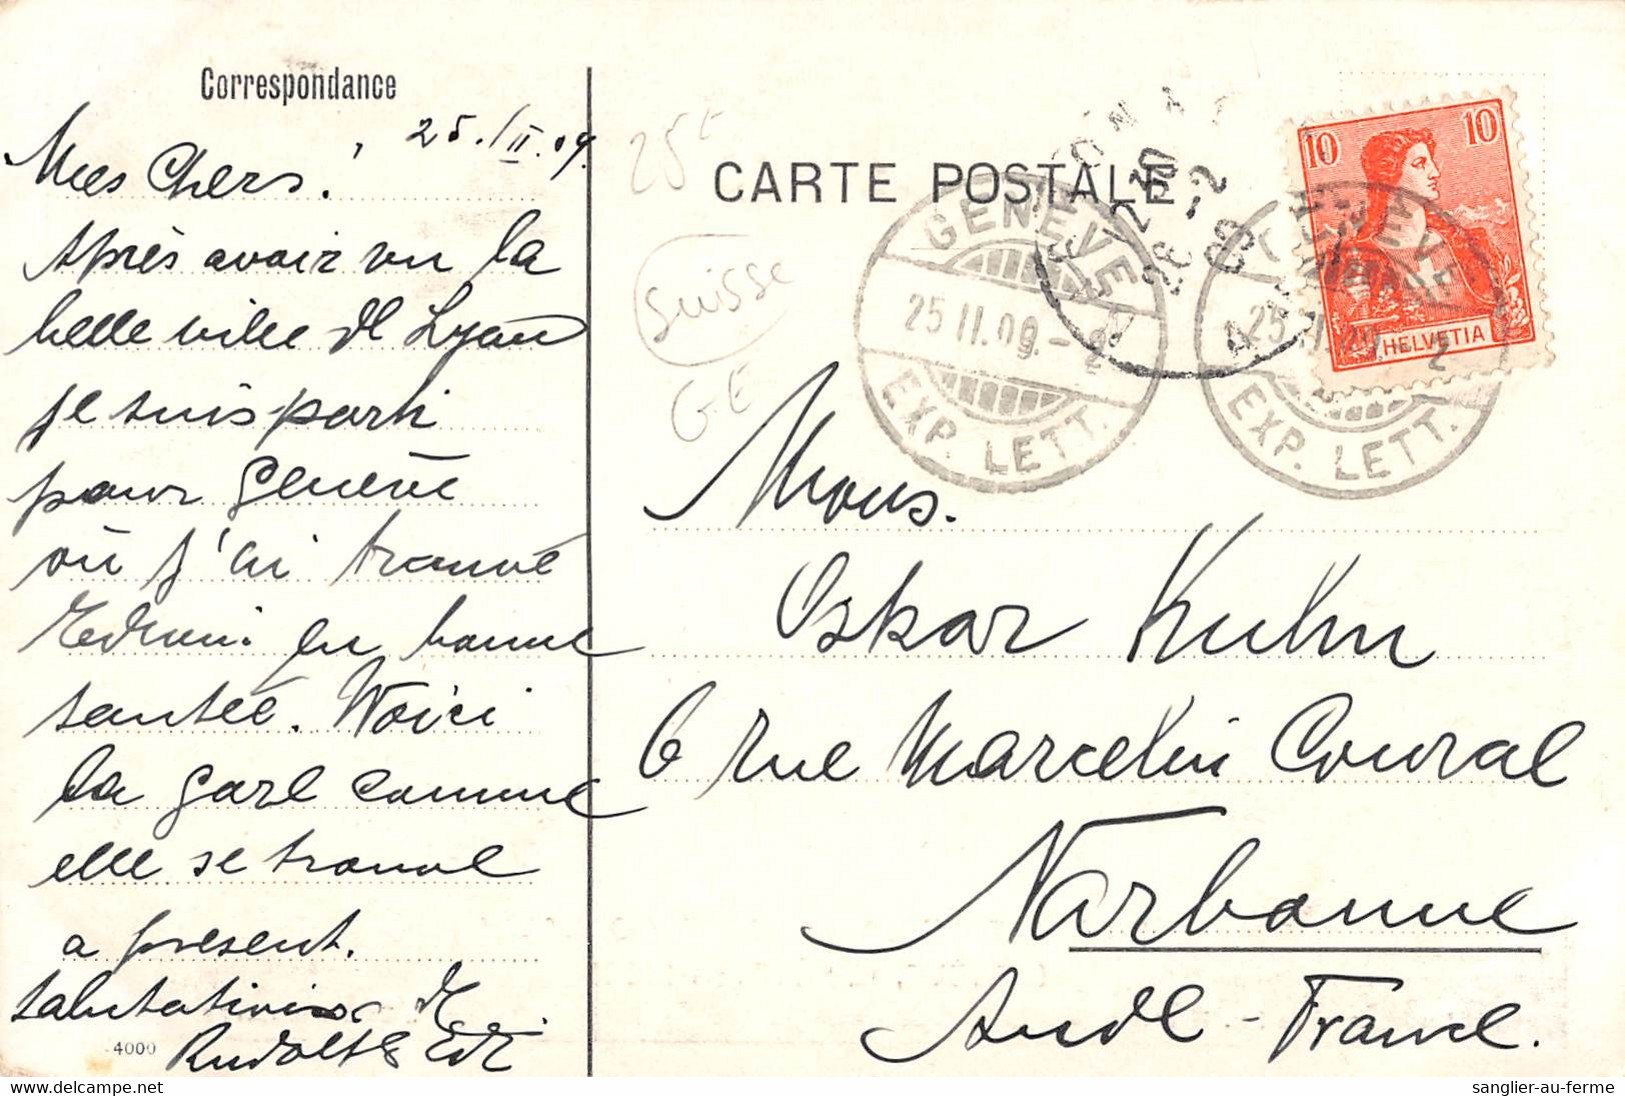 CPA SUISSE GENEVE INCENDIE DE LA GARE DE CORNAVIN GENEVE 12 FEVRIER 1909 - Genève